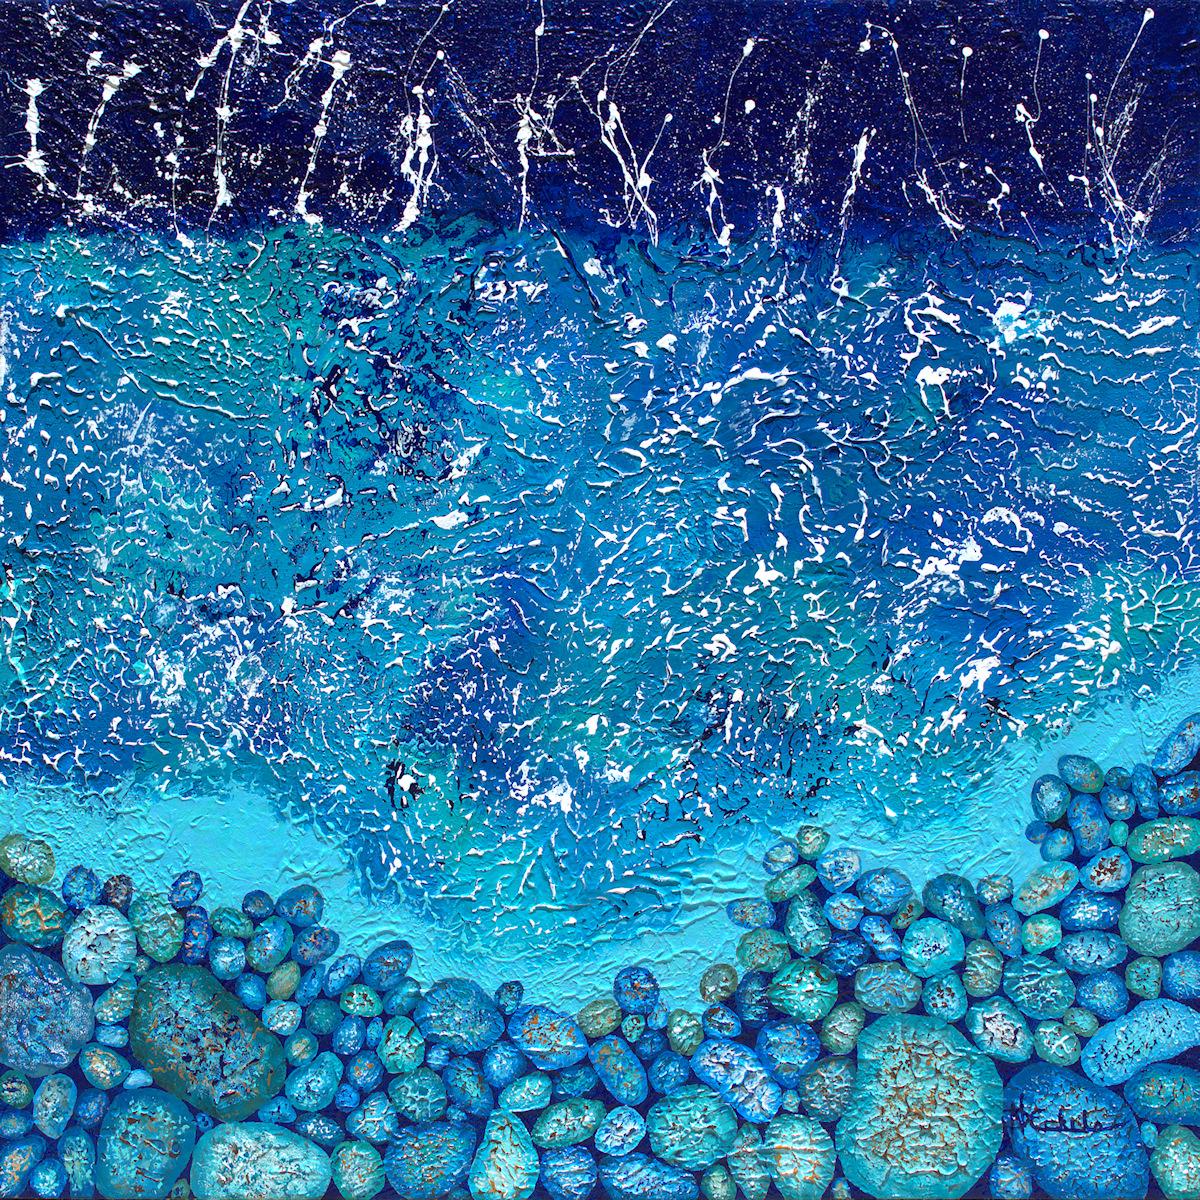 "Splashy Rocks" Mixed Media abstract with textural rich blues, teal, aqua - Mixed Media Art by Nancy Eckels